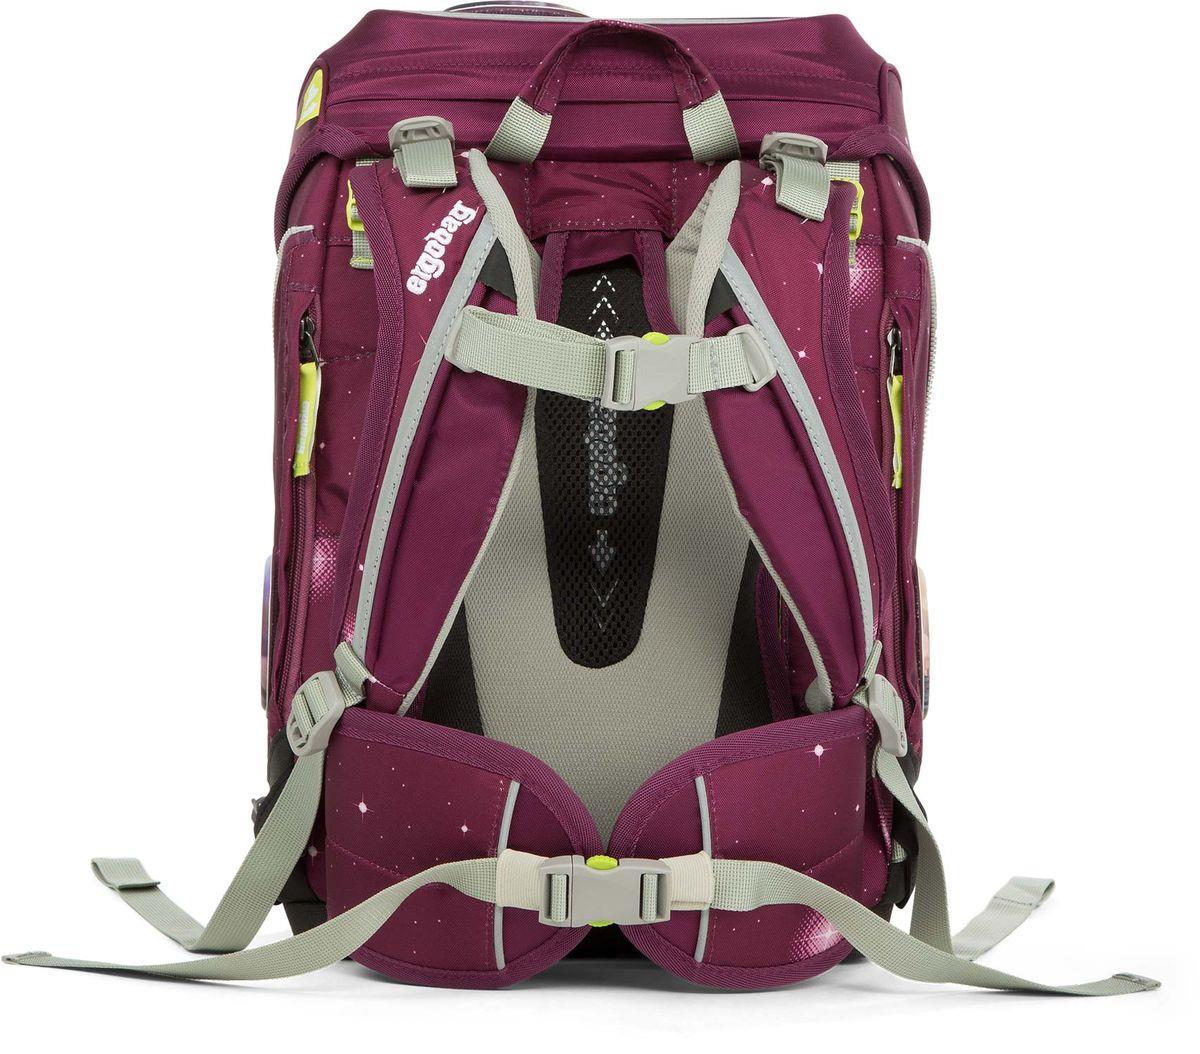 ergobag SET Cubo 5-pcs School Bag Purple Galaxy Edition